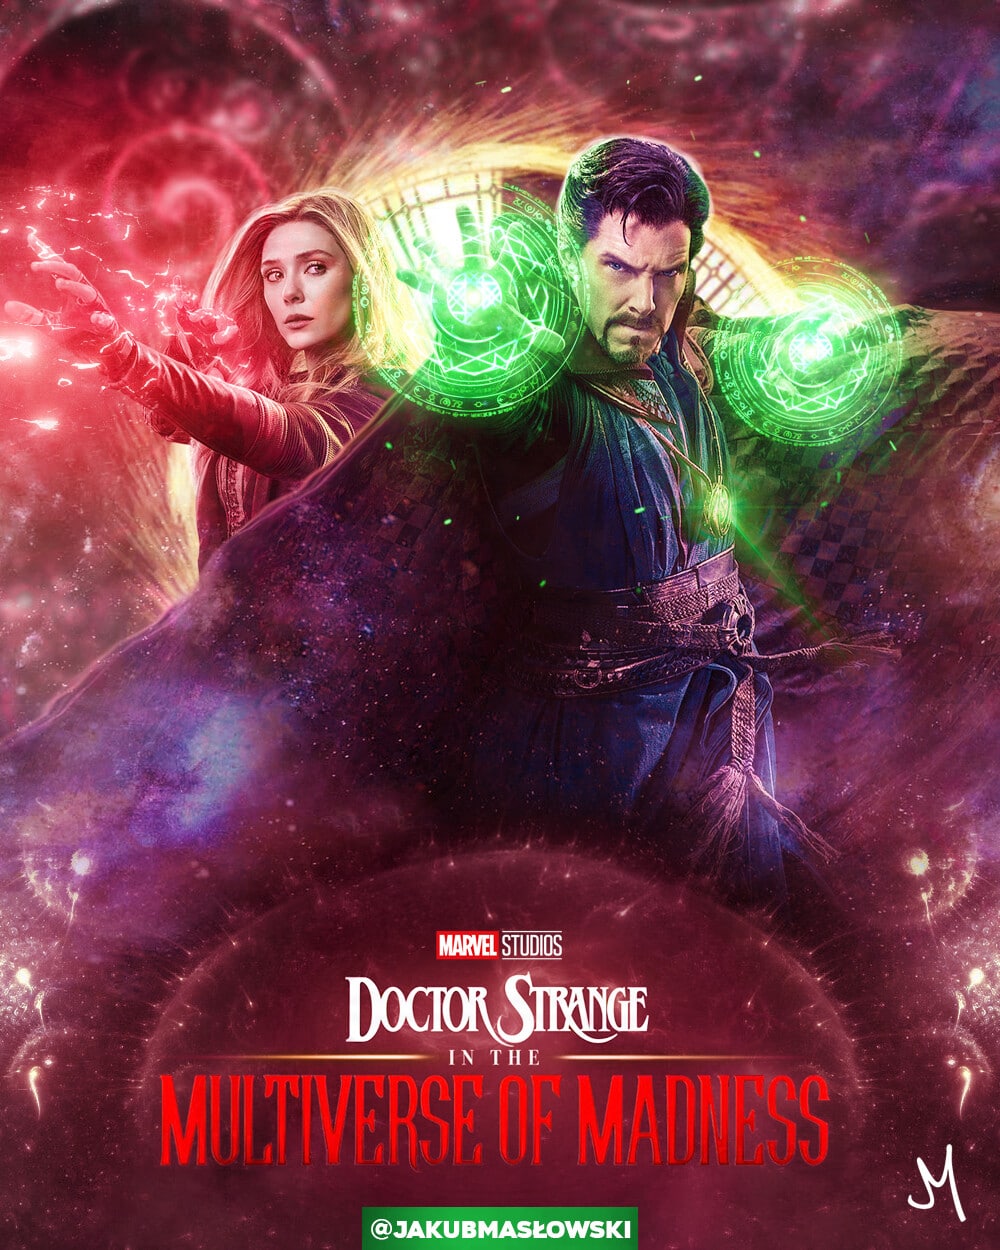 Doctor Strange 2 Synopsis Reports Return of Infinity Stones